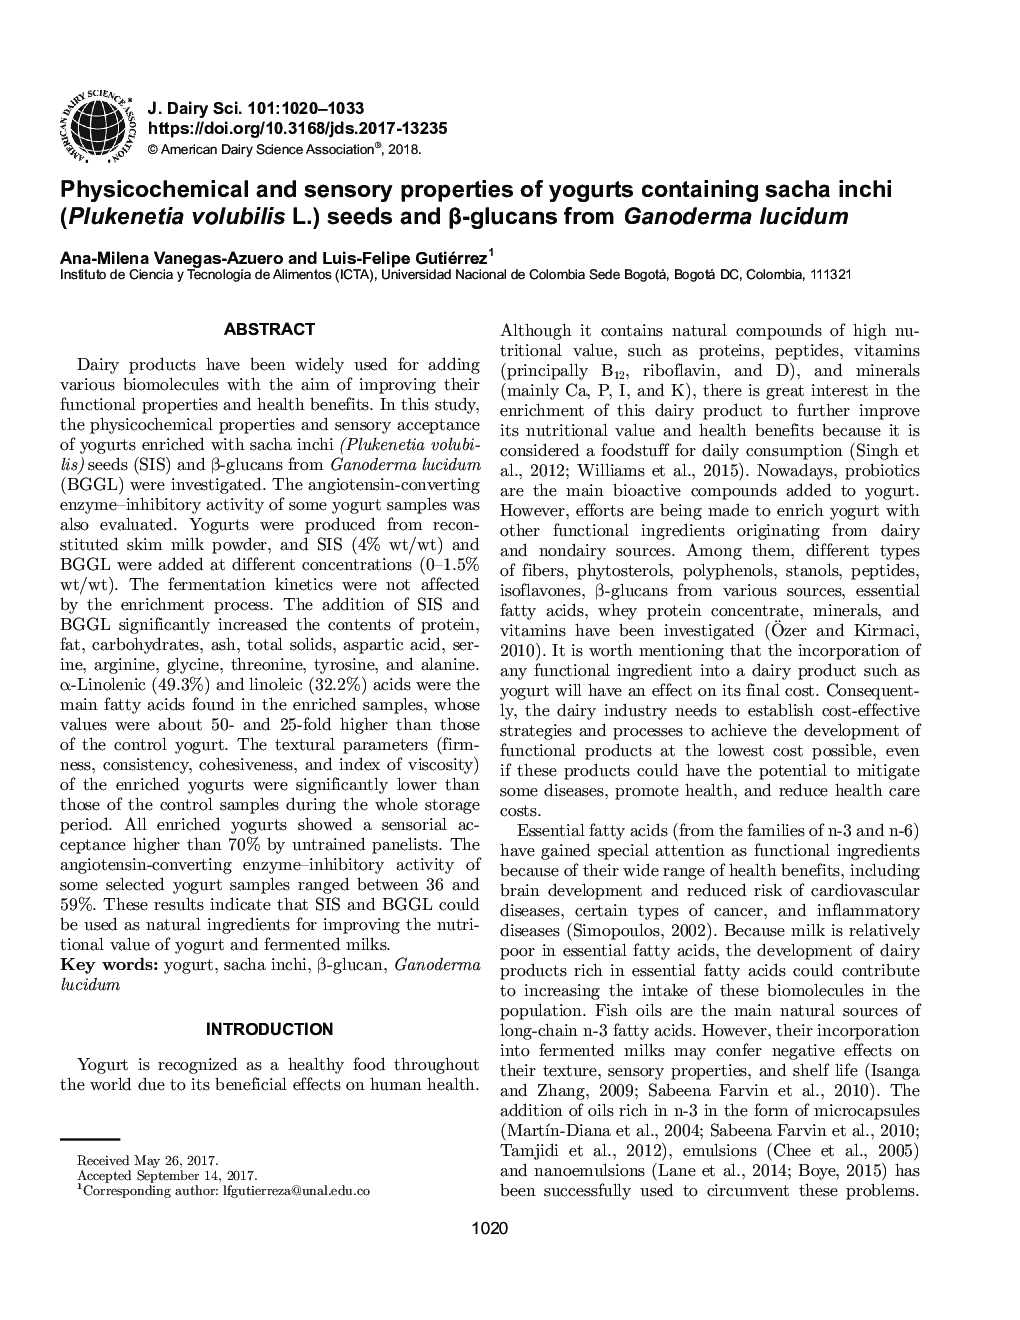 Physicochemical and sensory properties of yogurts containing sacha inchi (Plukenetia volubilis L.) seeds and Î²-glucans from Ganoderma lucidum